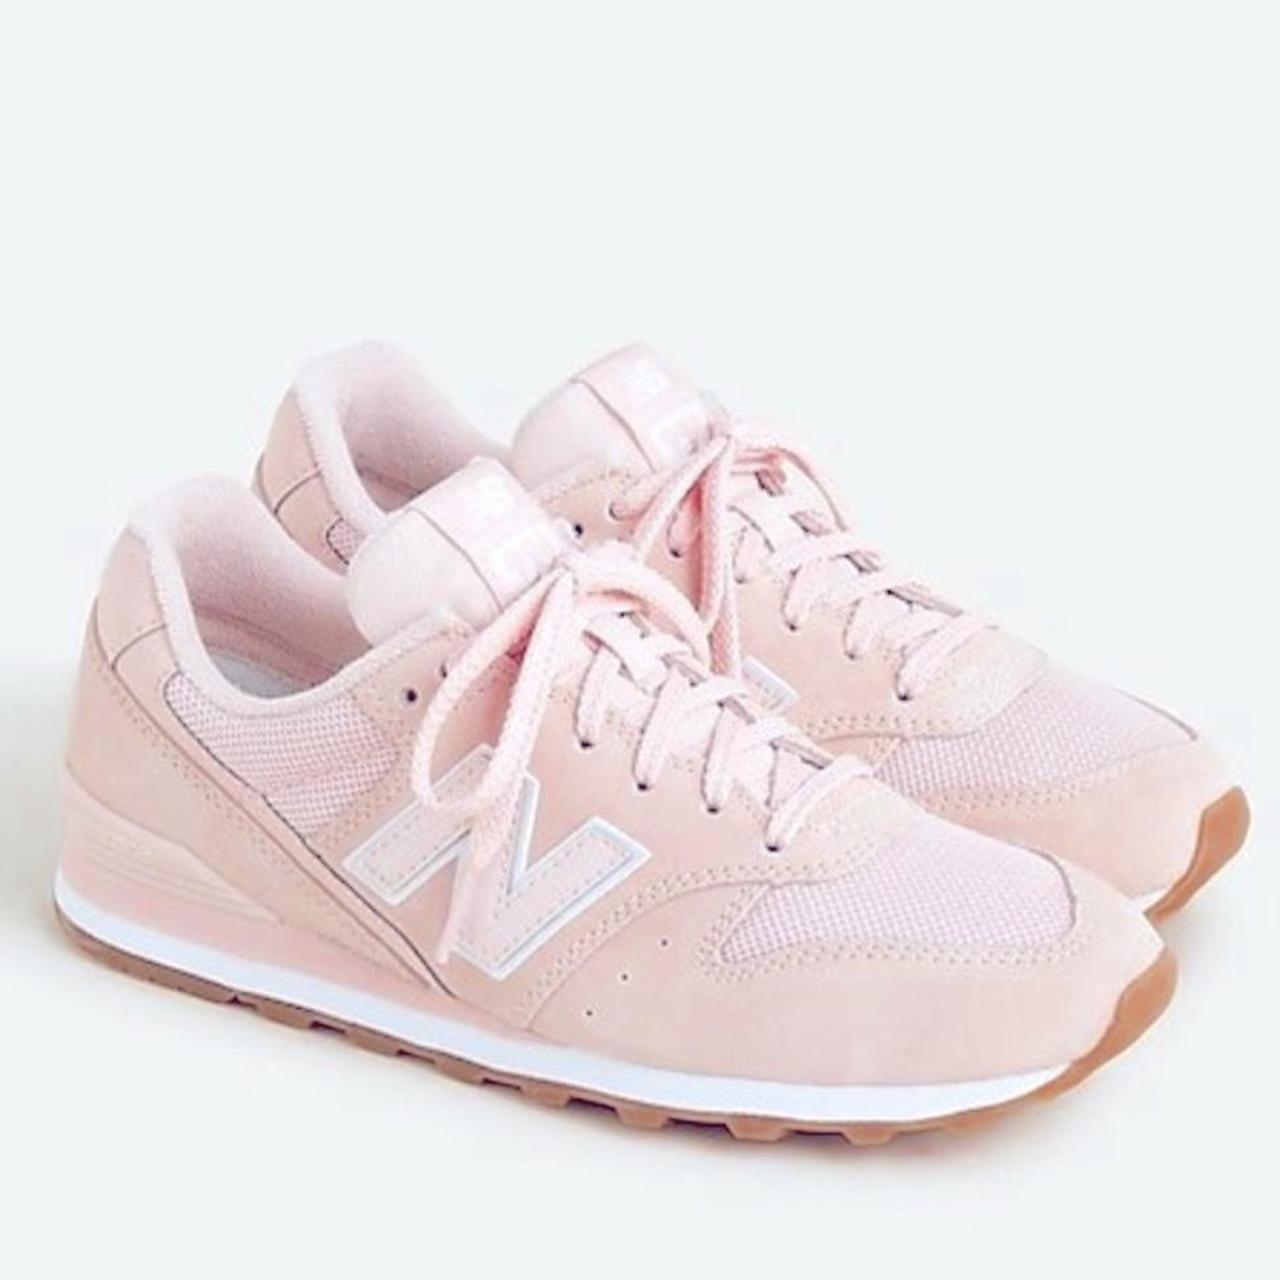 New Balance 996 Baby Pink Sneakers 🍓🥛 please note... - Depop